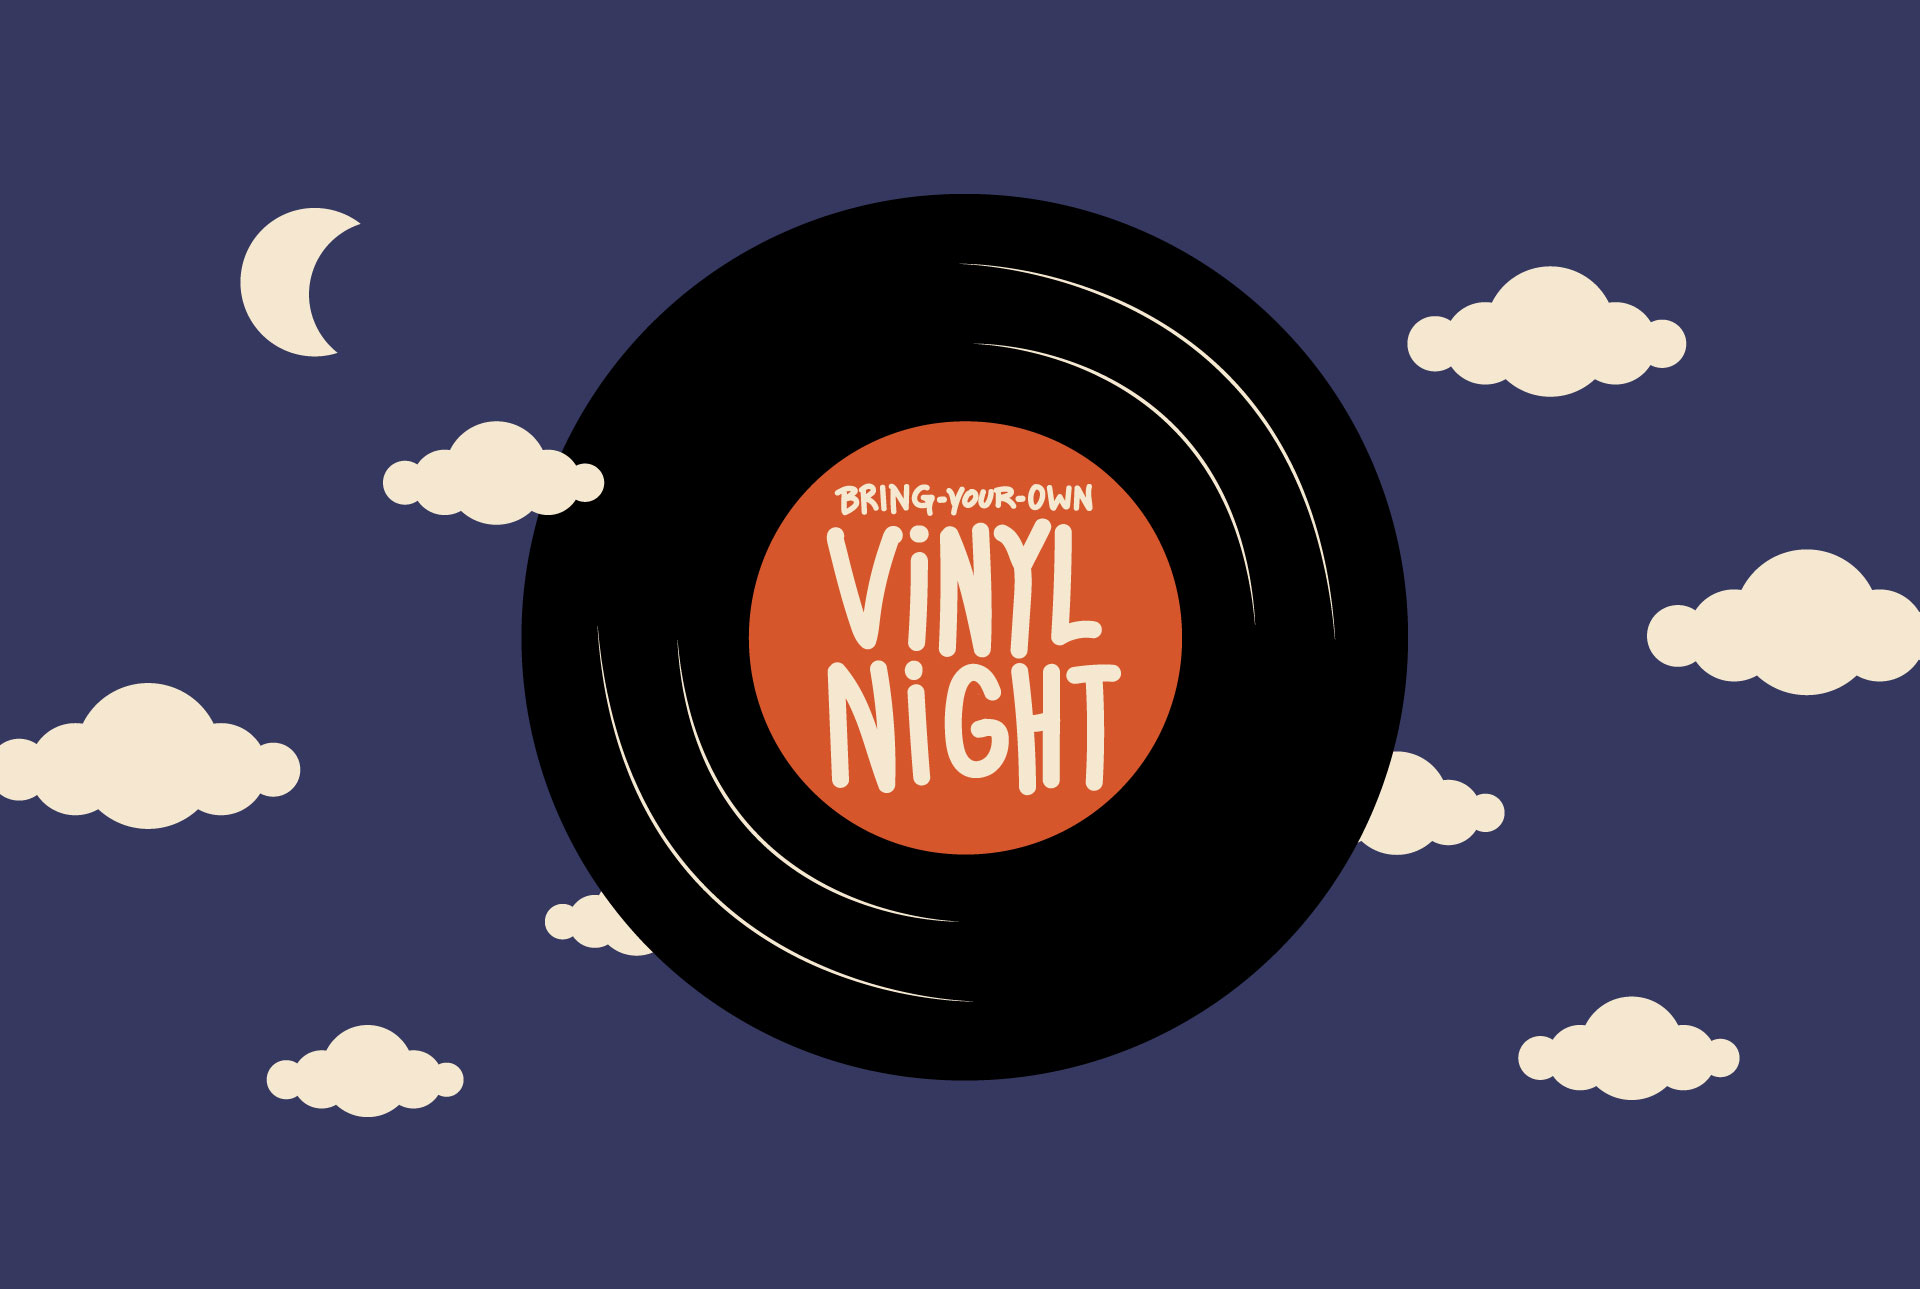 Bring Your own Vinyl Night